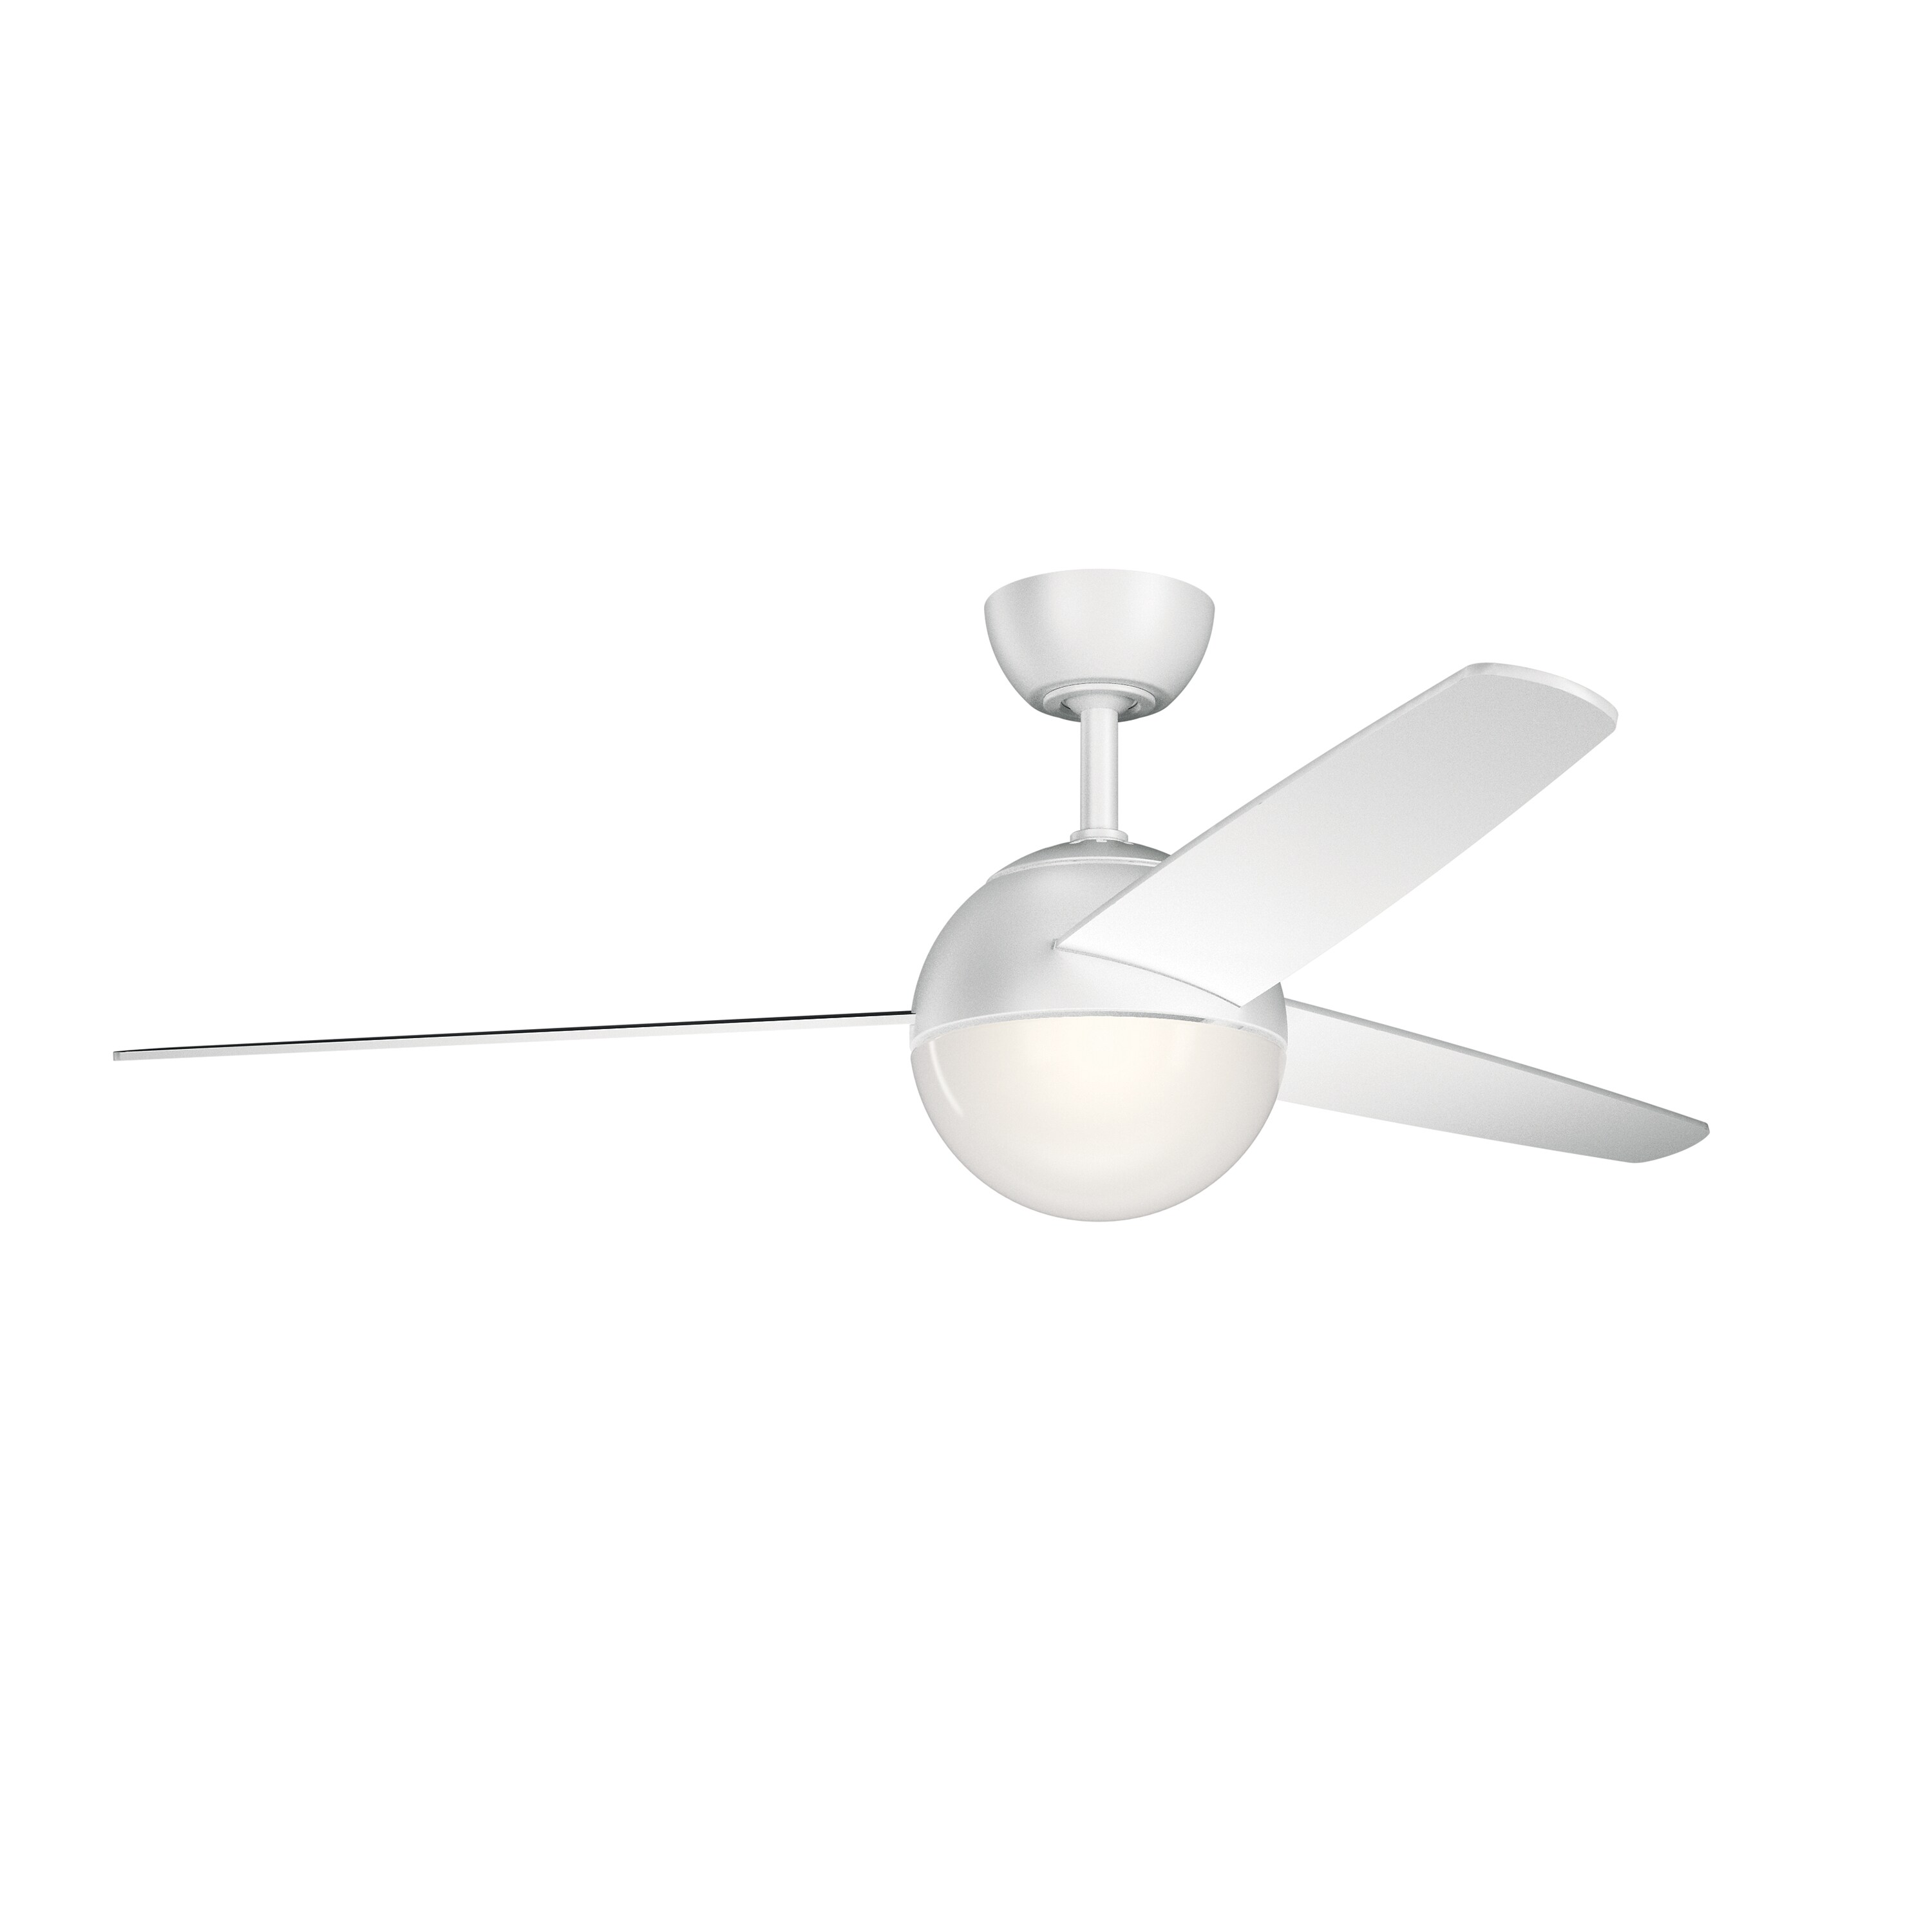 Spyra LED 62 Ceiling Fan in Matte White